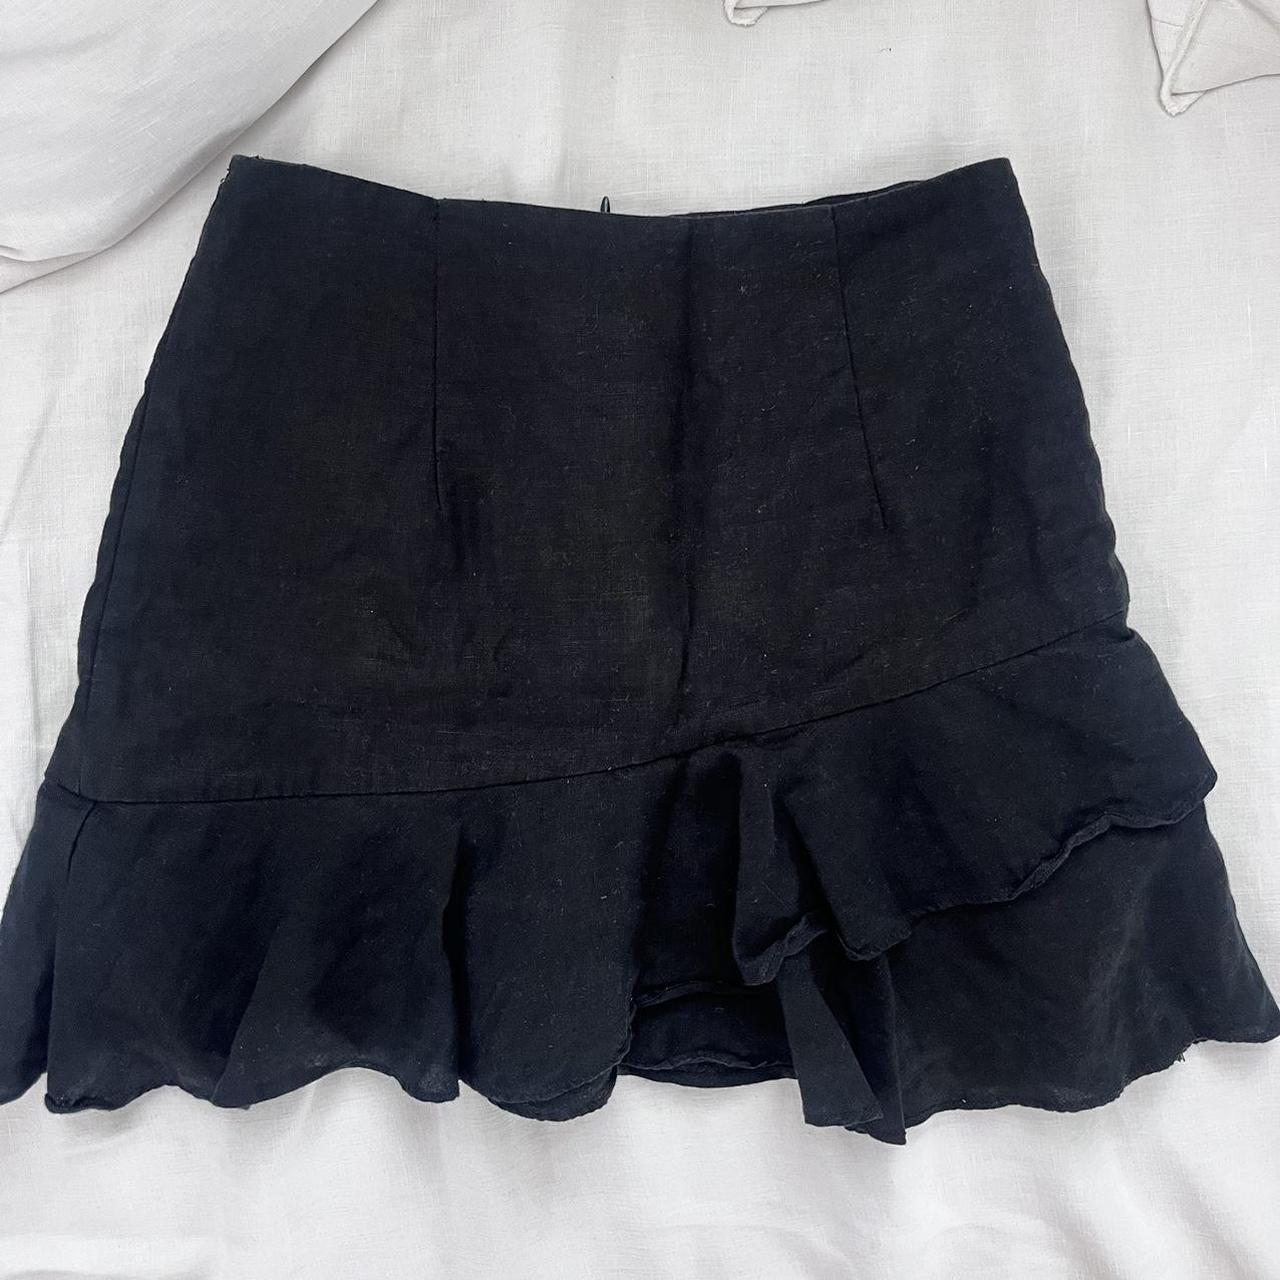 Cutest lil Bek and bridge mini skirt - Depop